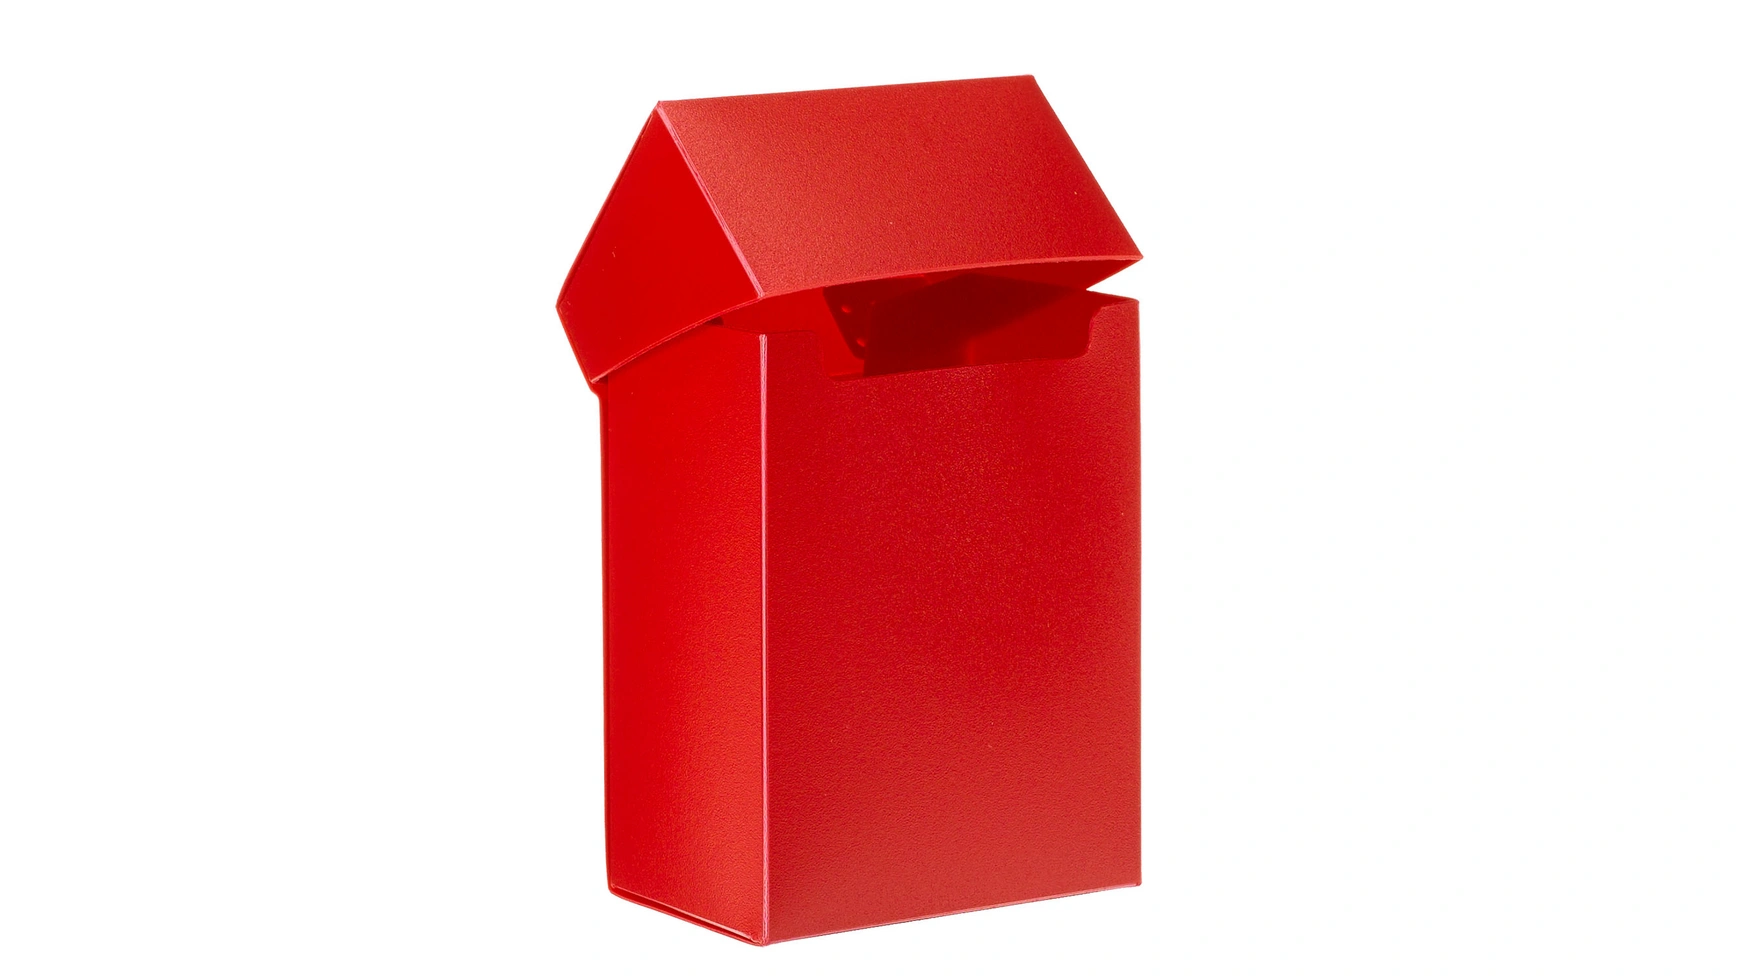 Müller Toy Place Картонная коробка красная Mueller кубок малый пластик лучший руководитель 13 х 7 5 х 7 5 см